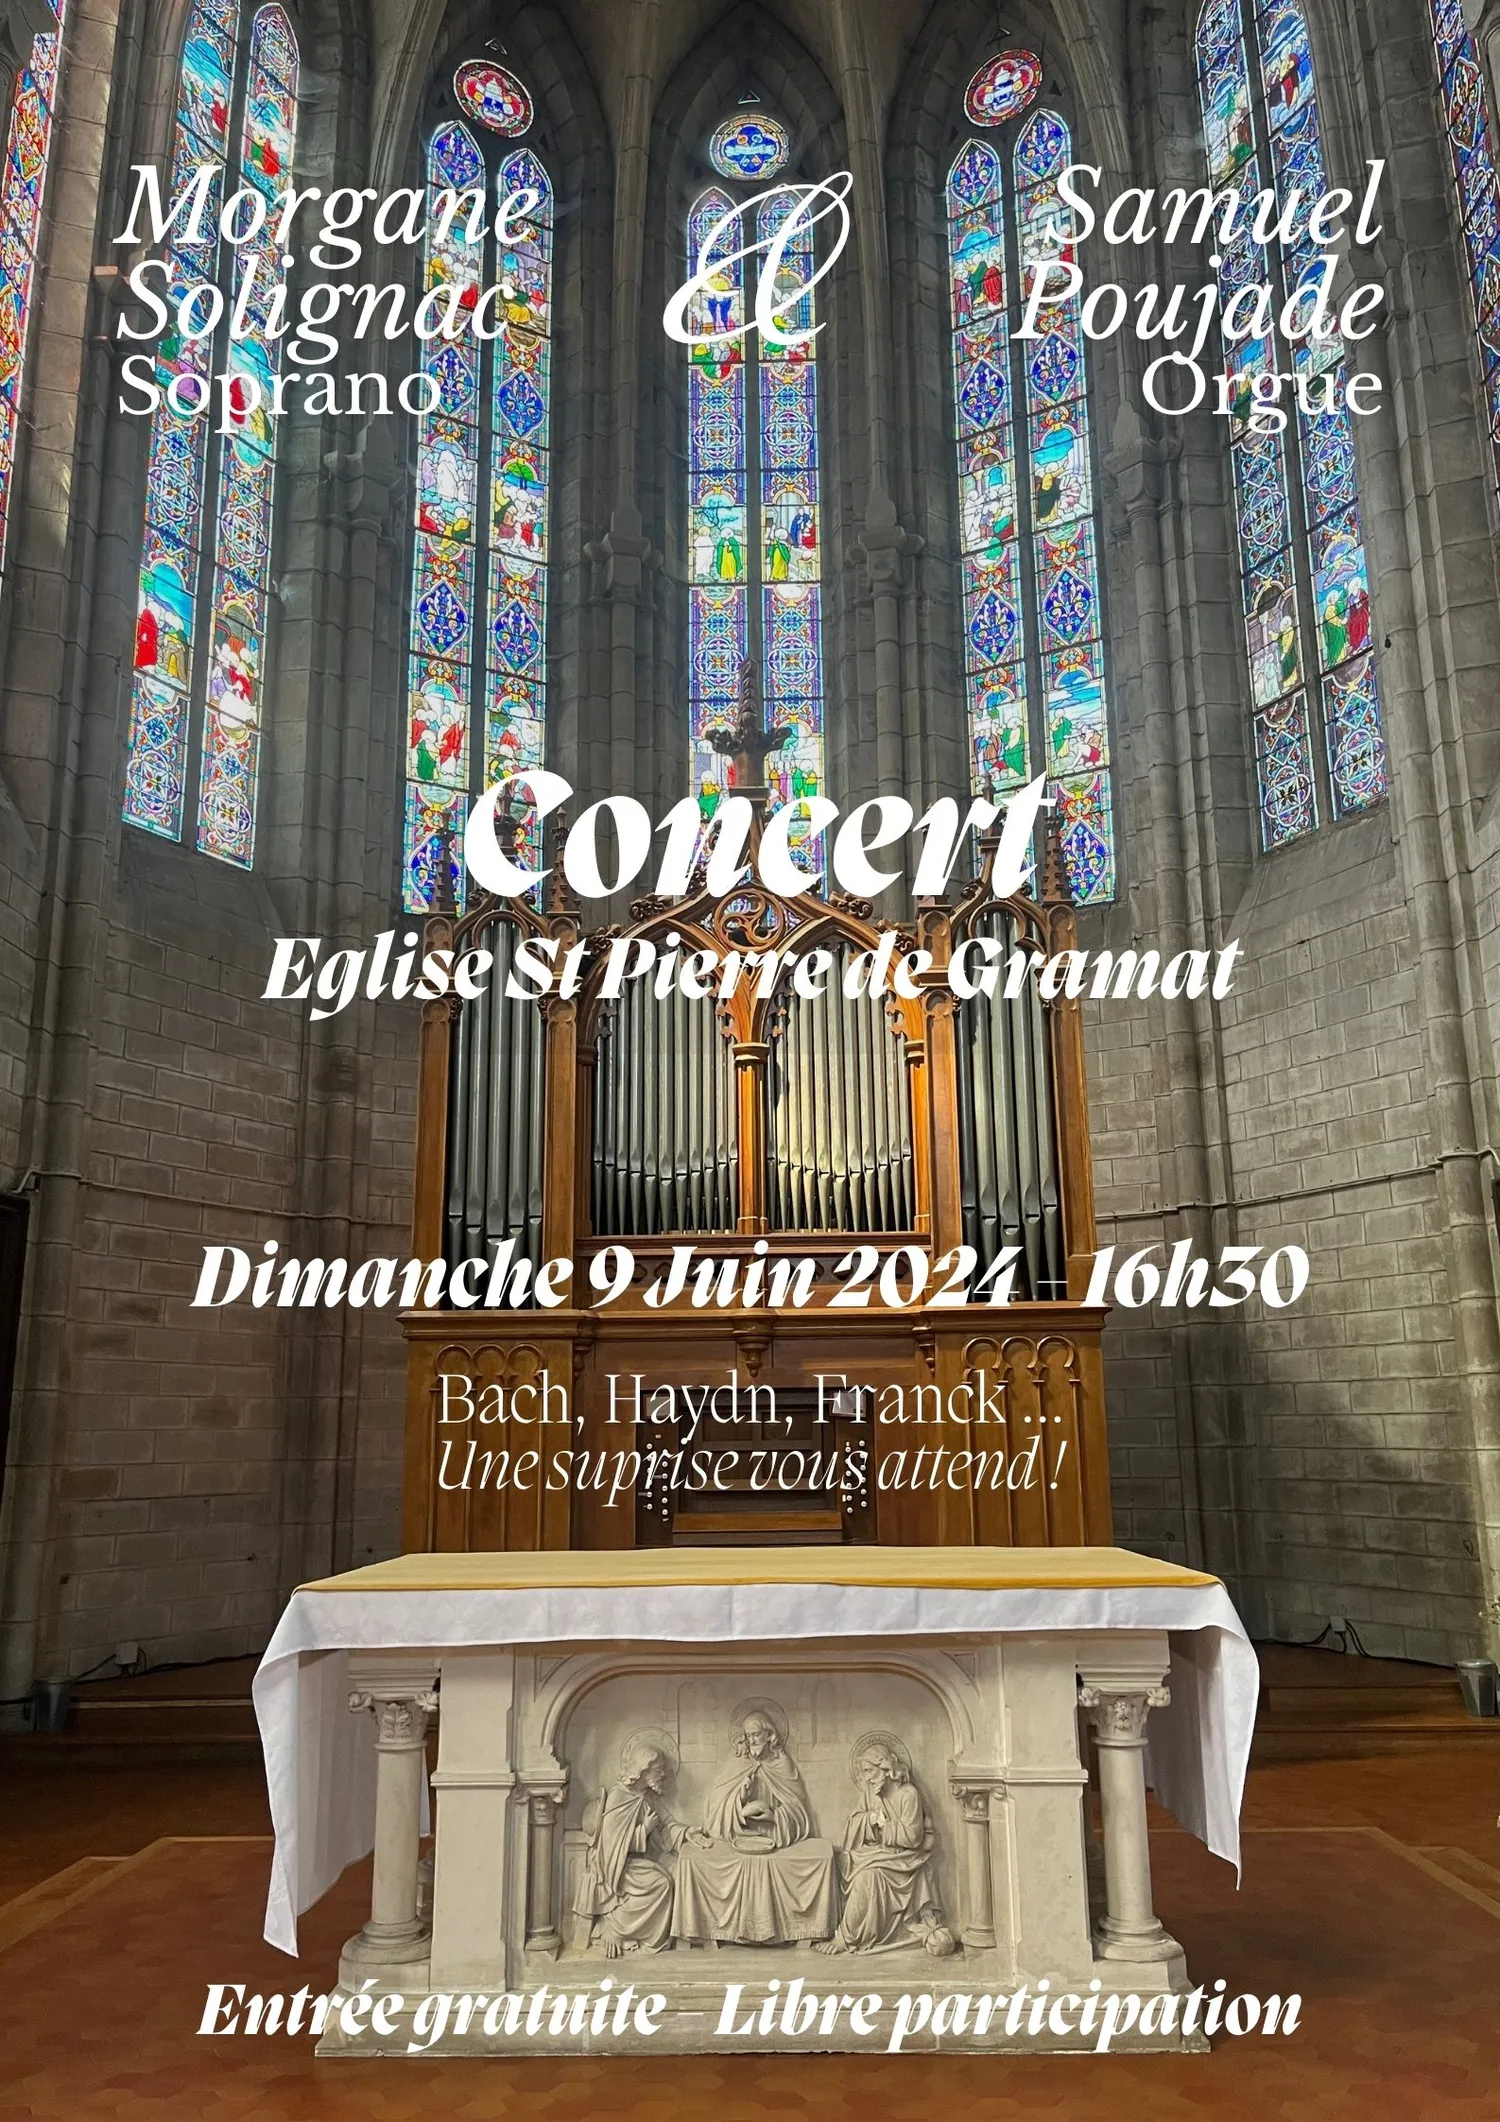 Image qui illustre: Concert Soprano & Orgue Avec Morgane Solignac Et Samuel Poujade à Gramat - 0